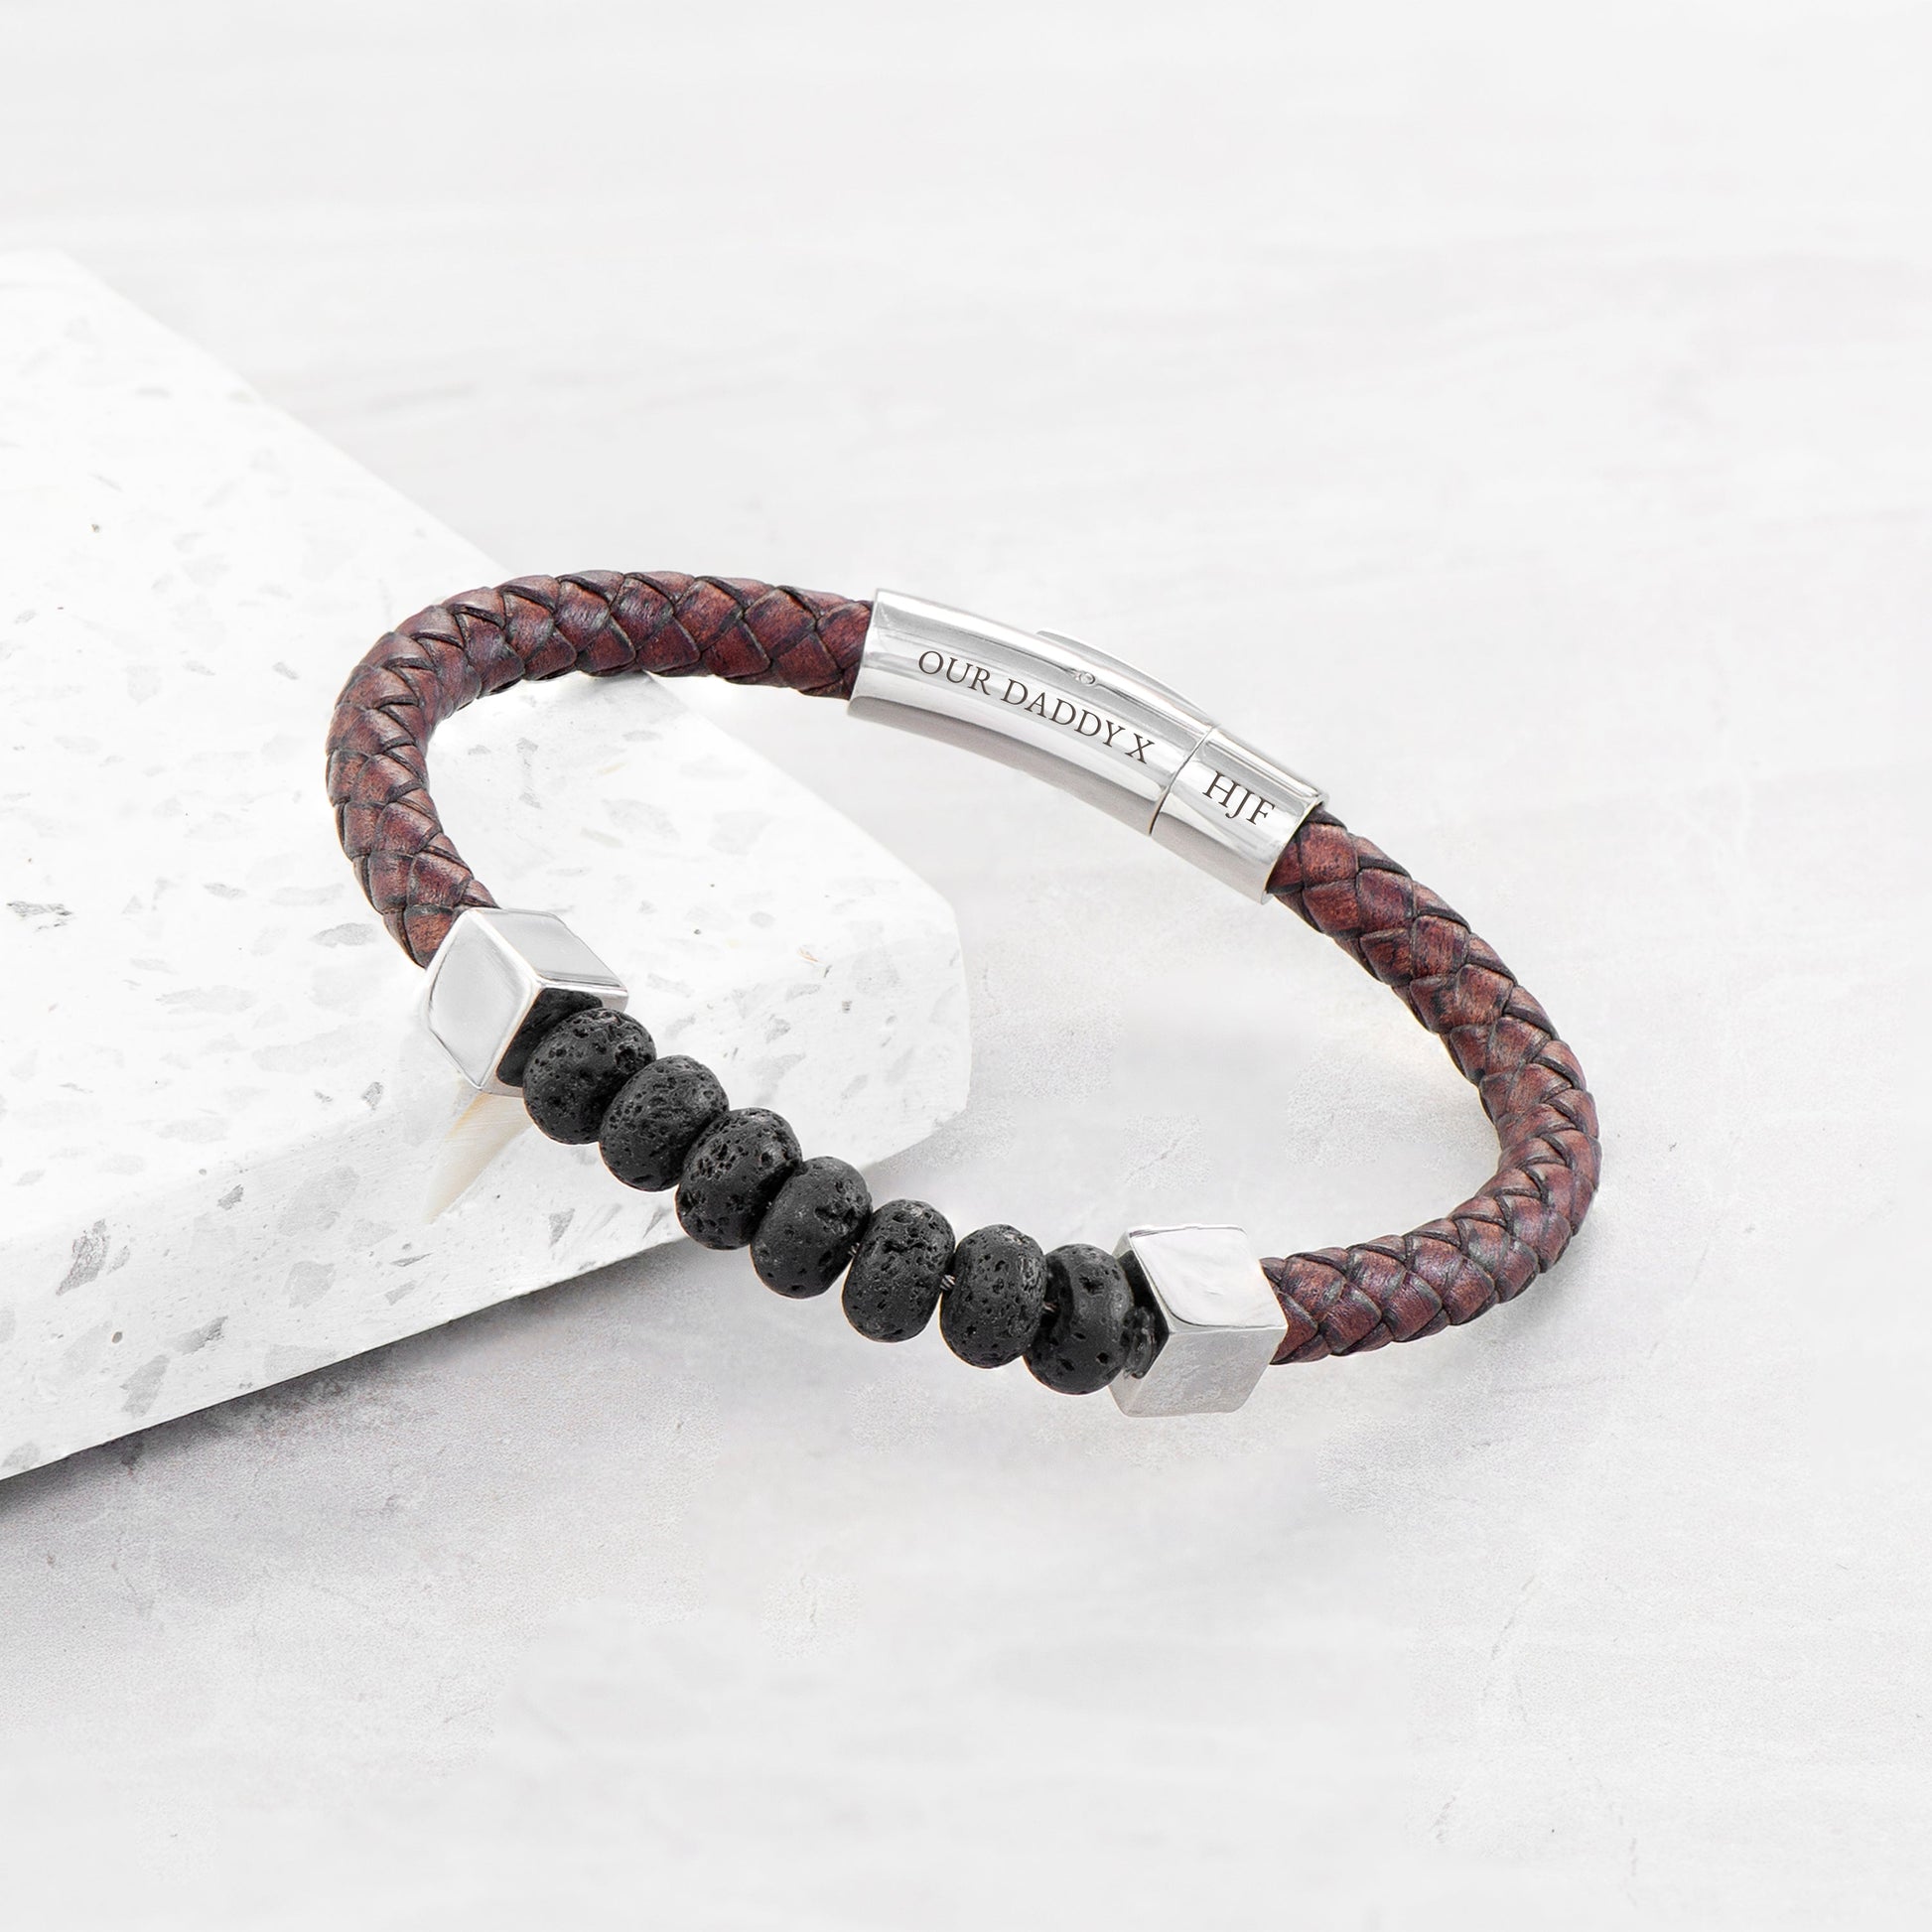 Personalized Men's Bracelets - Personalized Men's Leather Beaded Bracelet 